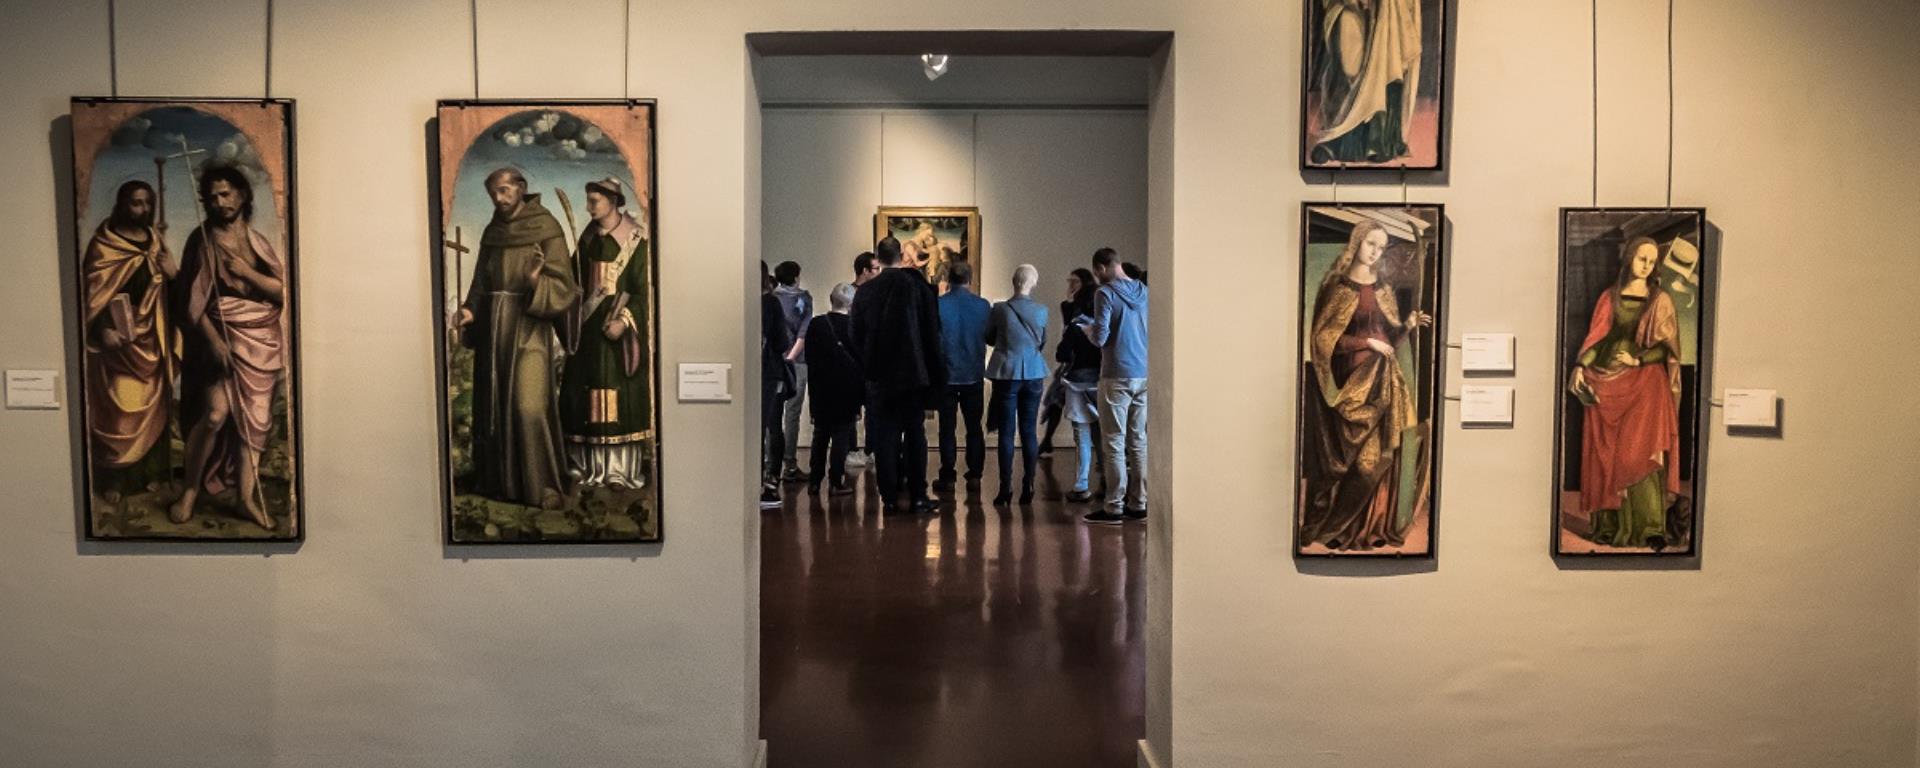 2017 - visite Fesch -intérieur du musée  odot 